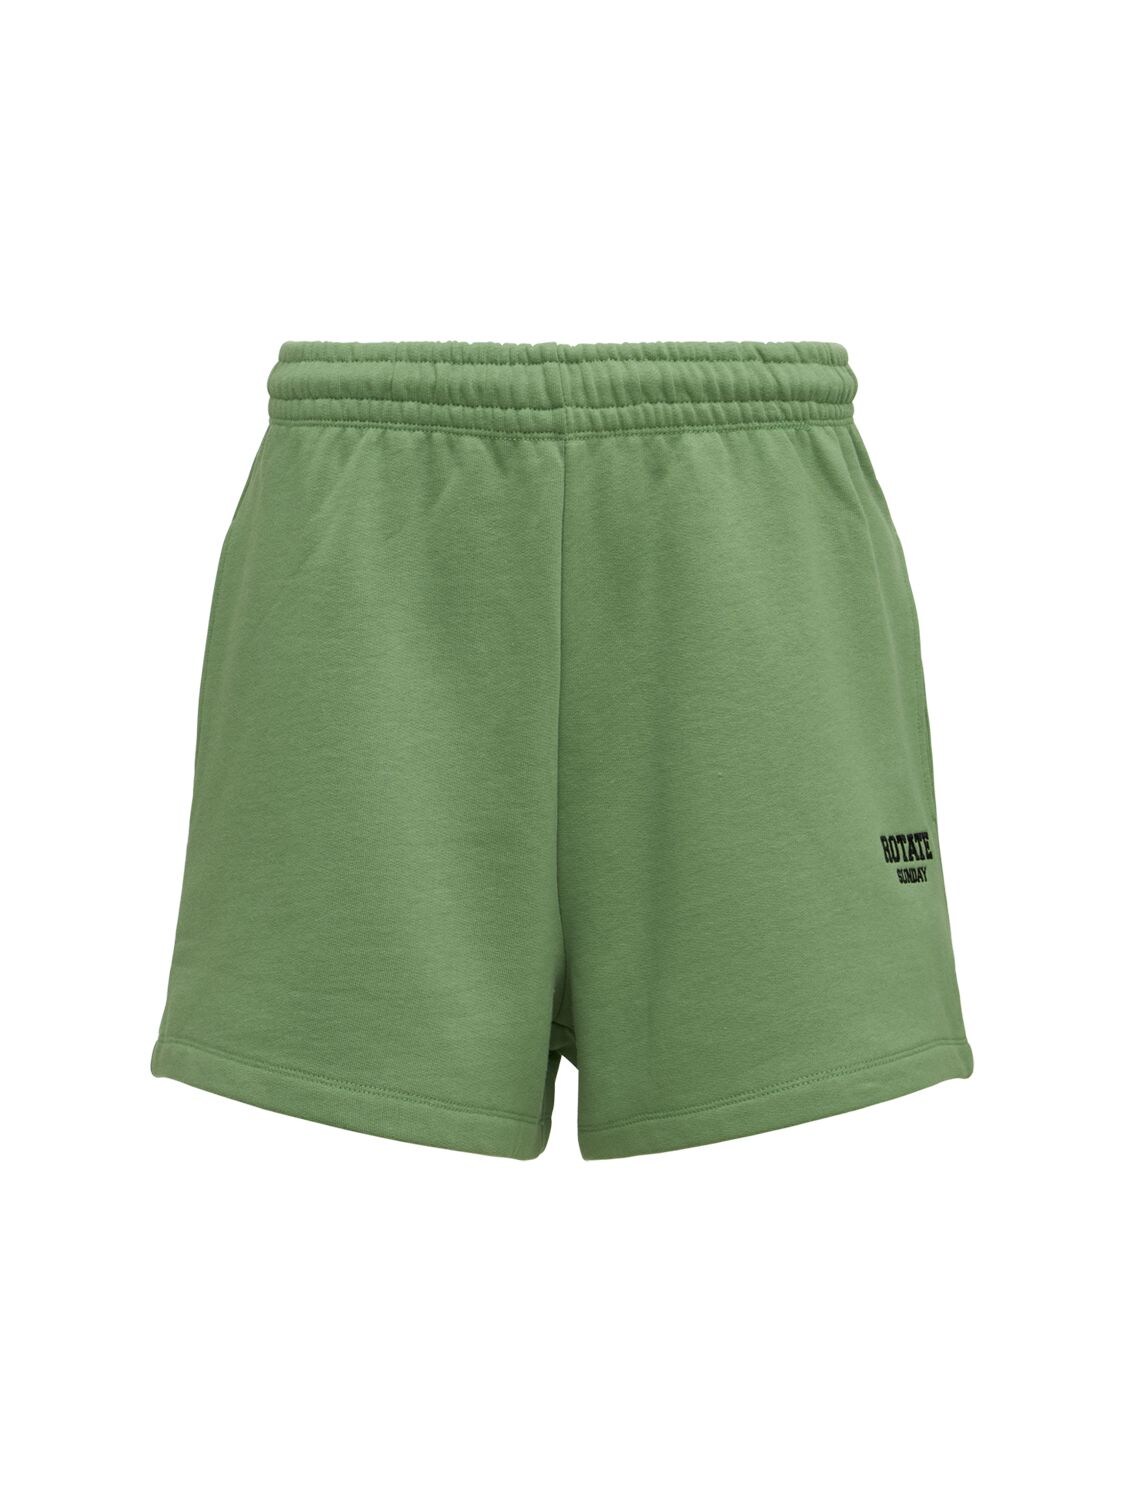 Lvr Exclusive Roda Cotton Shorts